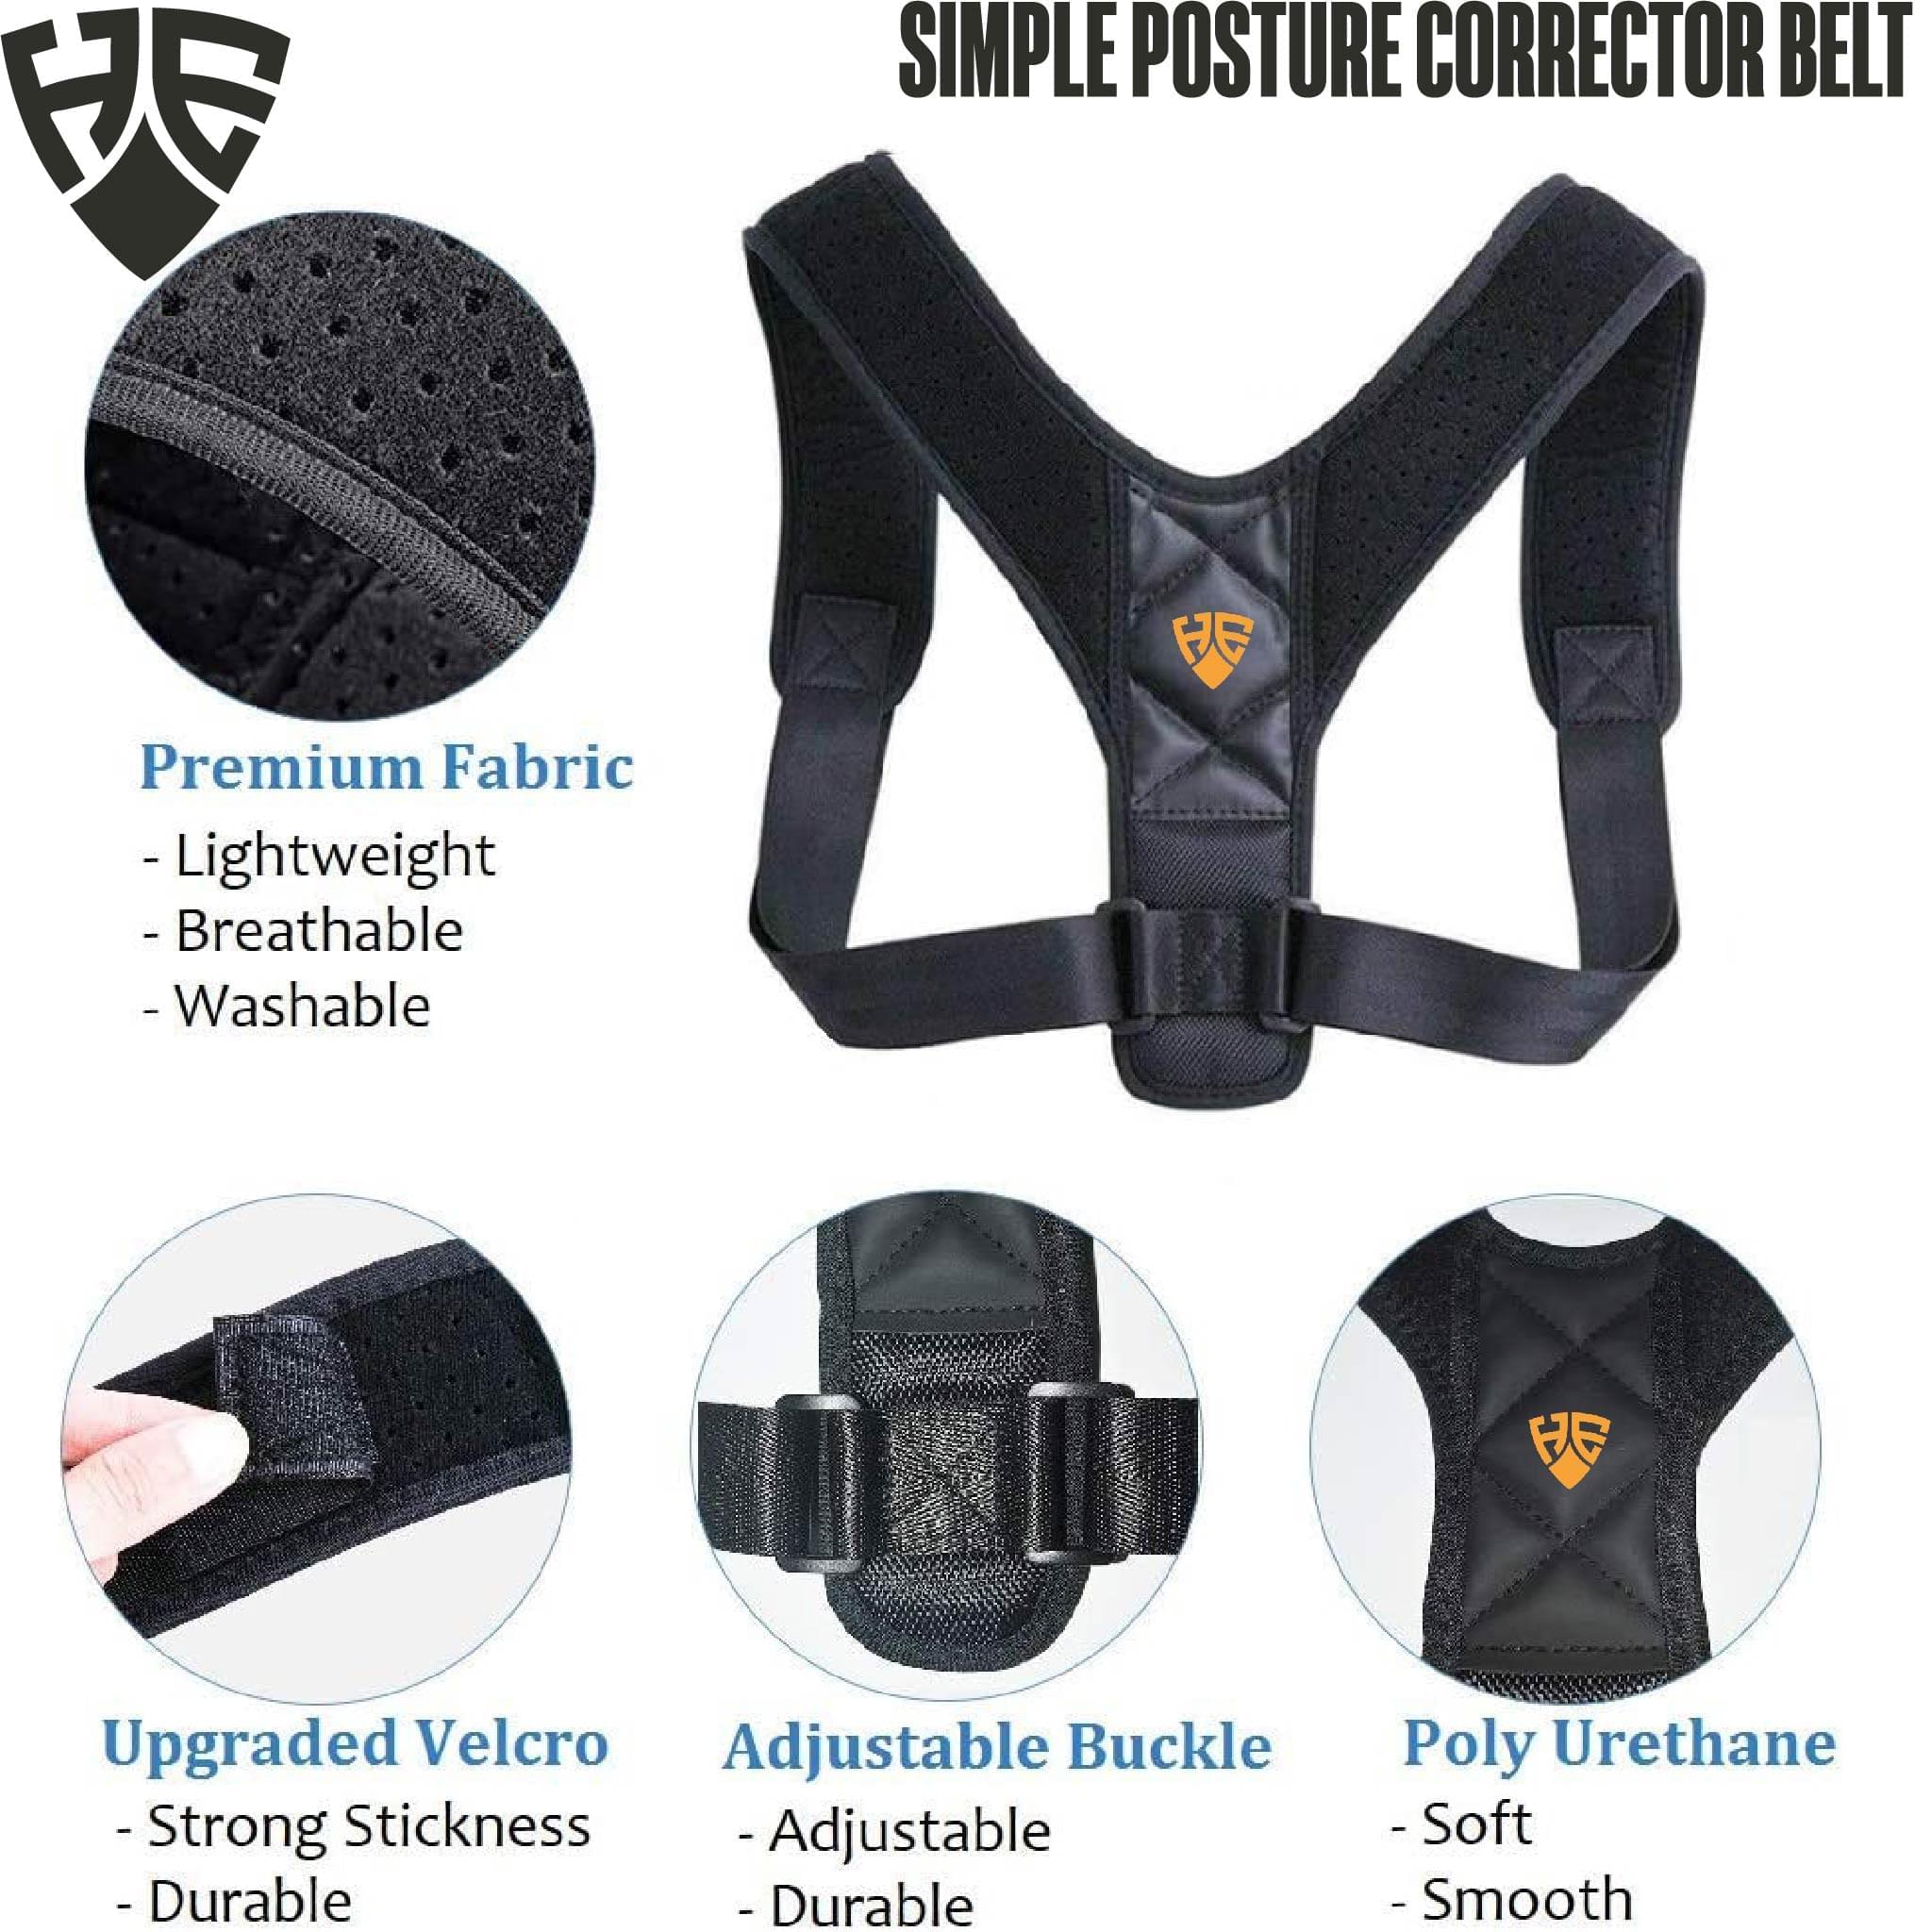 Simple Posture Corrector Belt